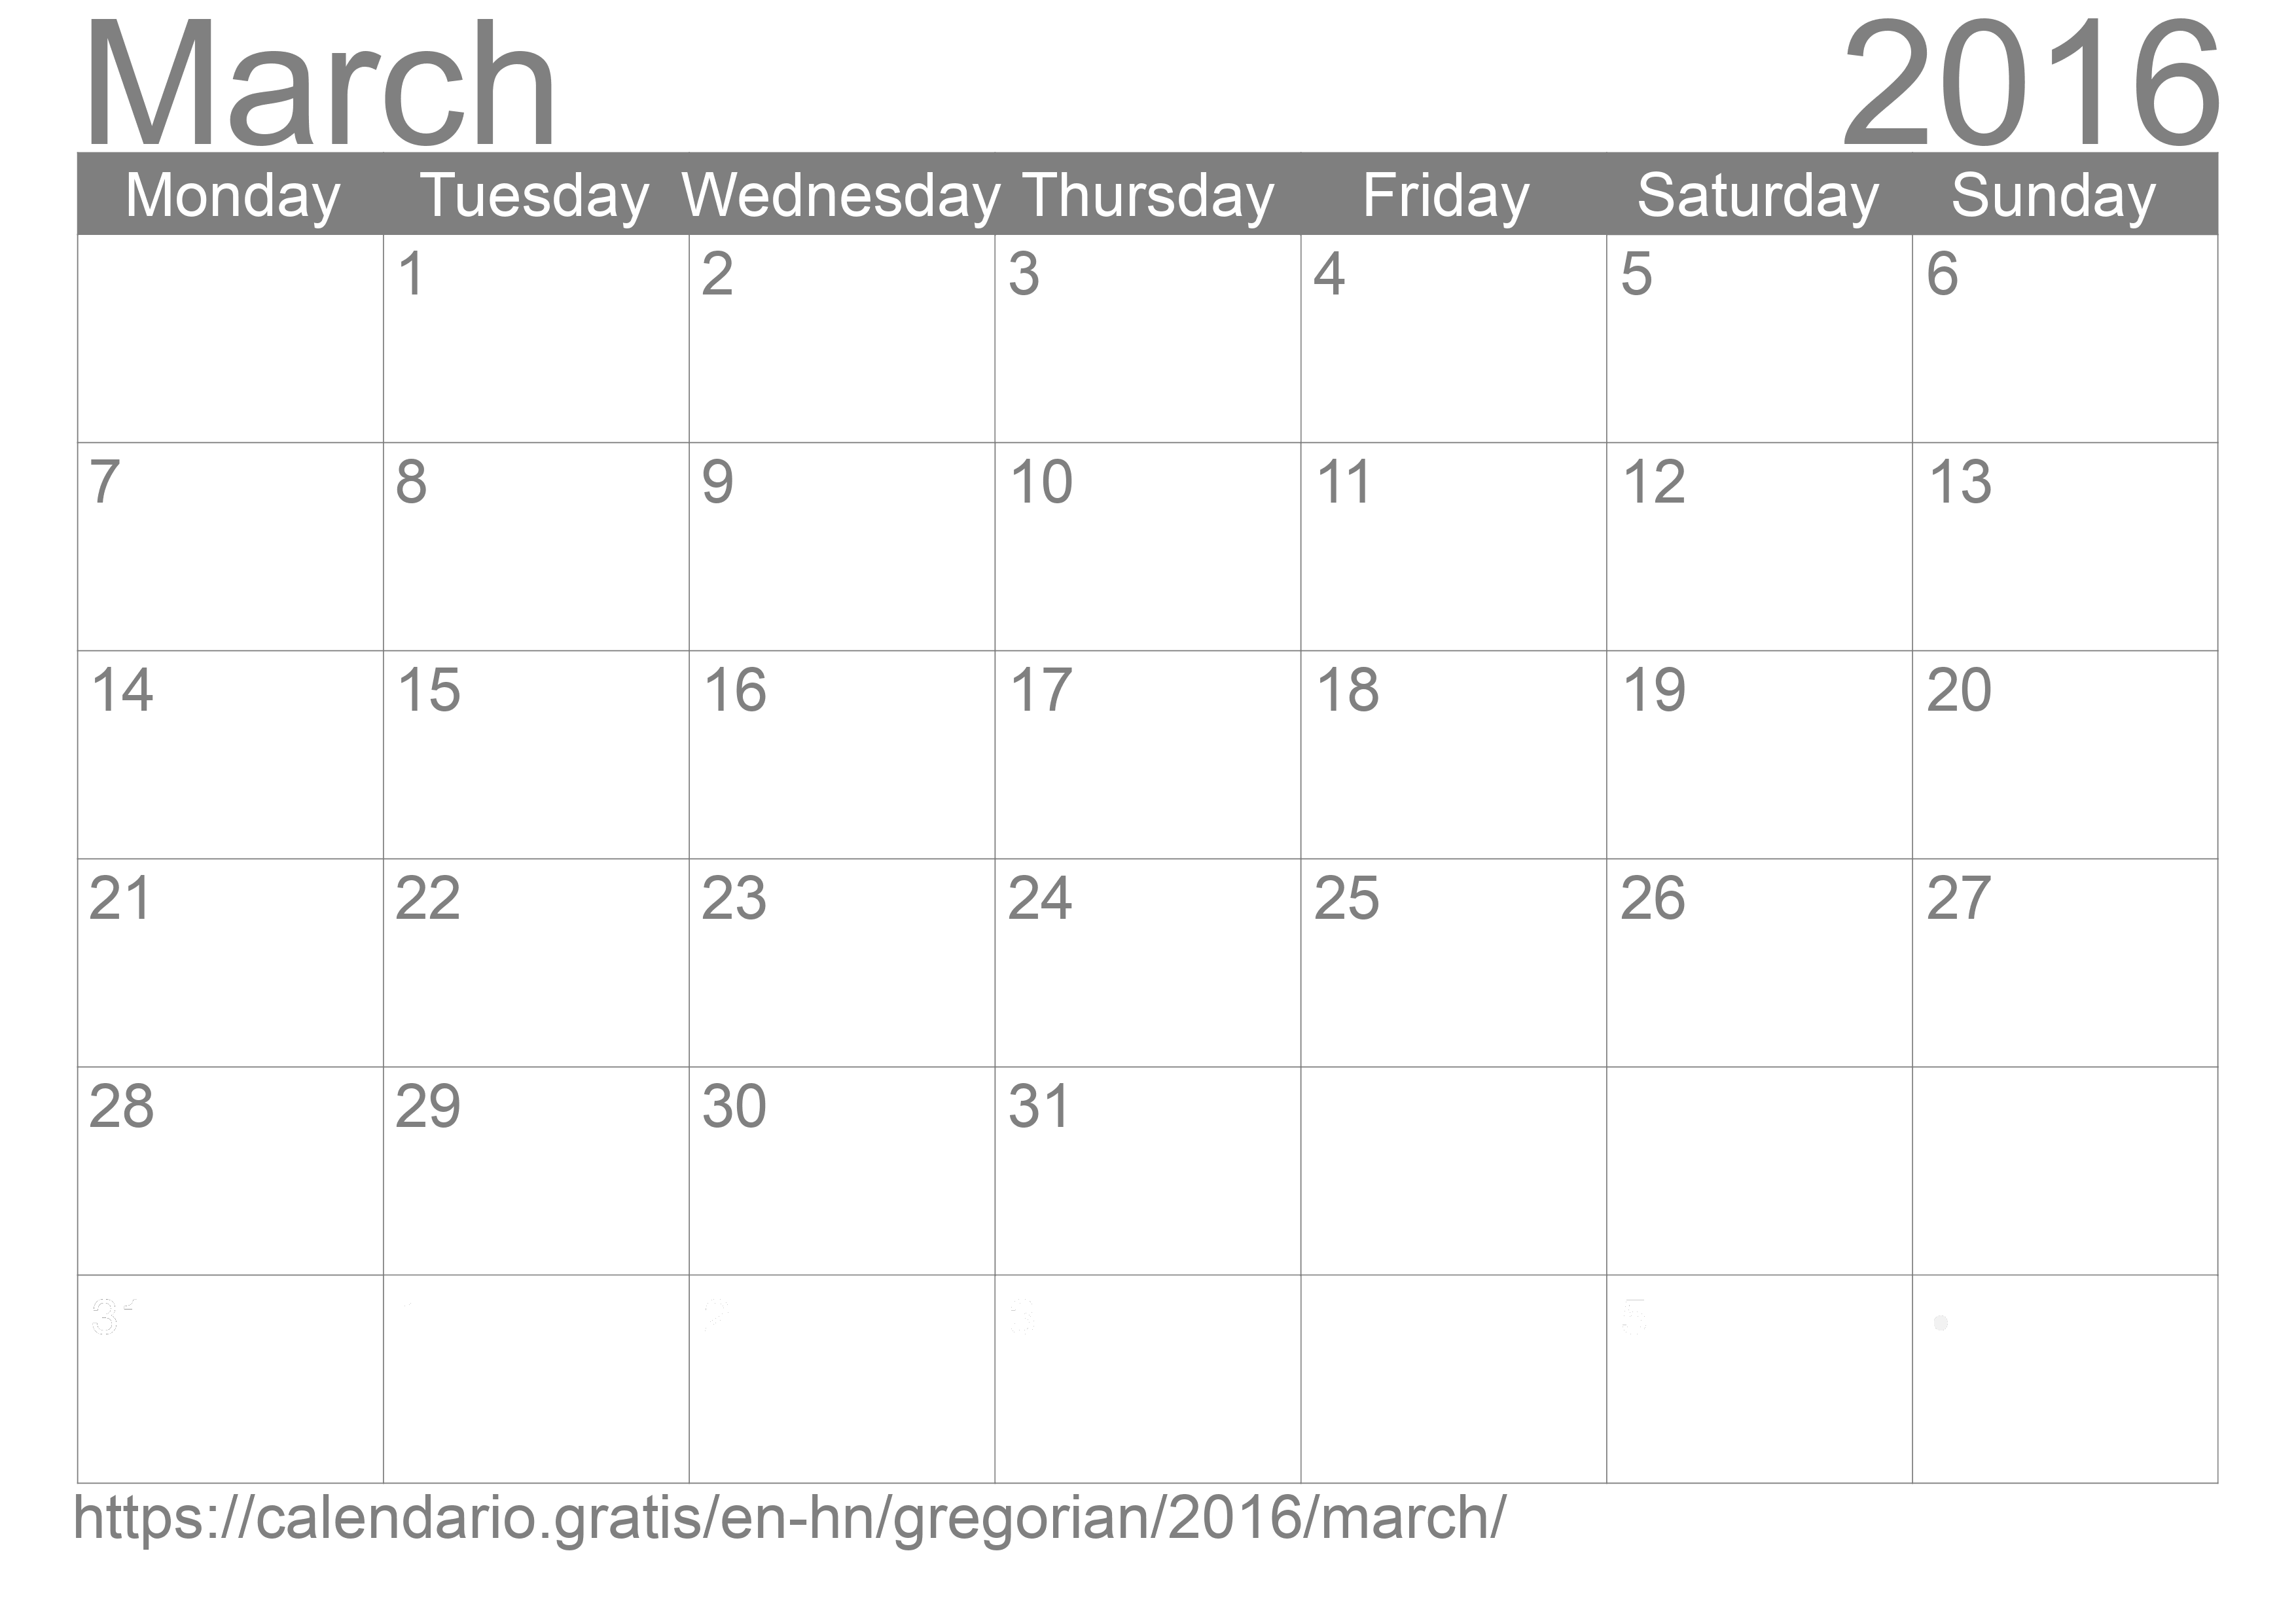 Calendar March 2016 to print